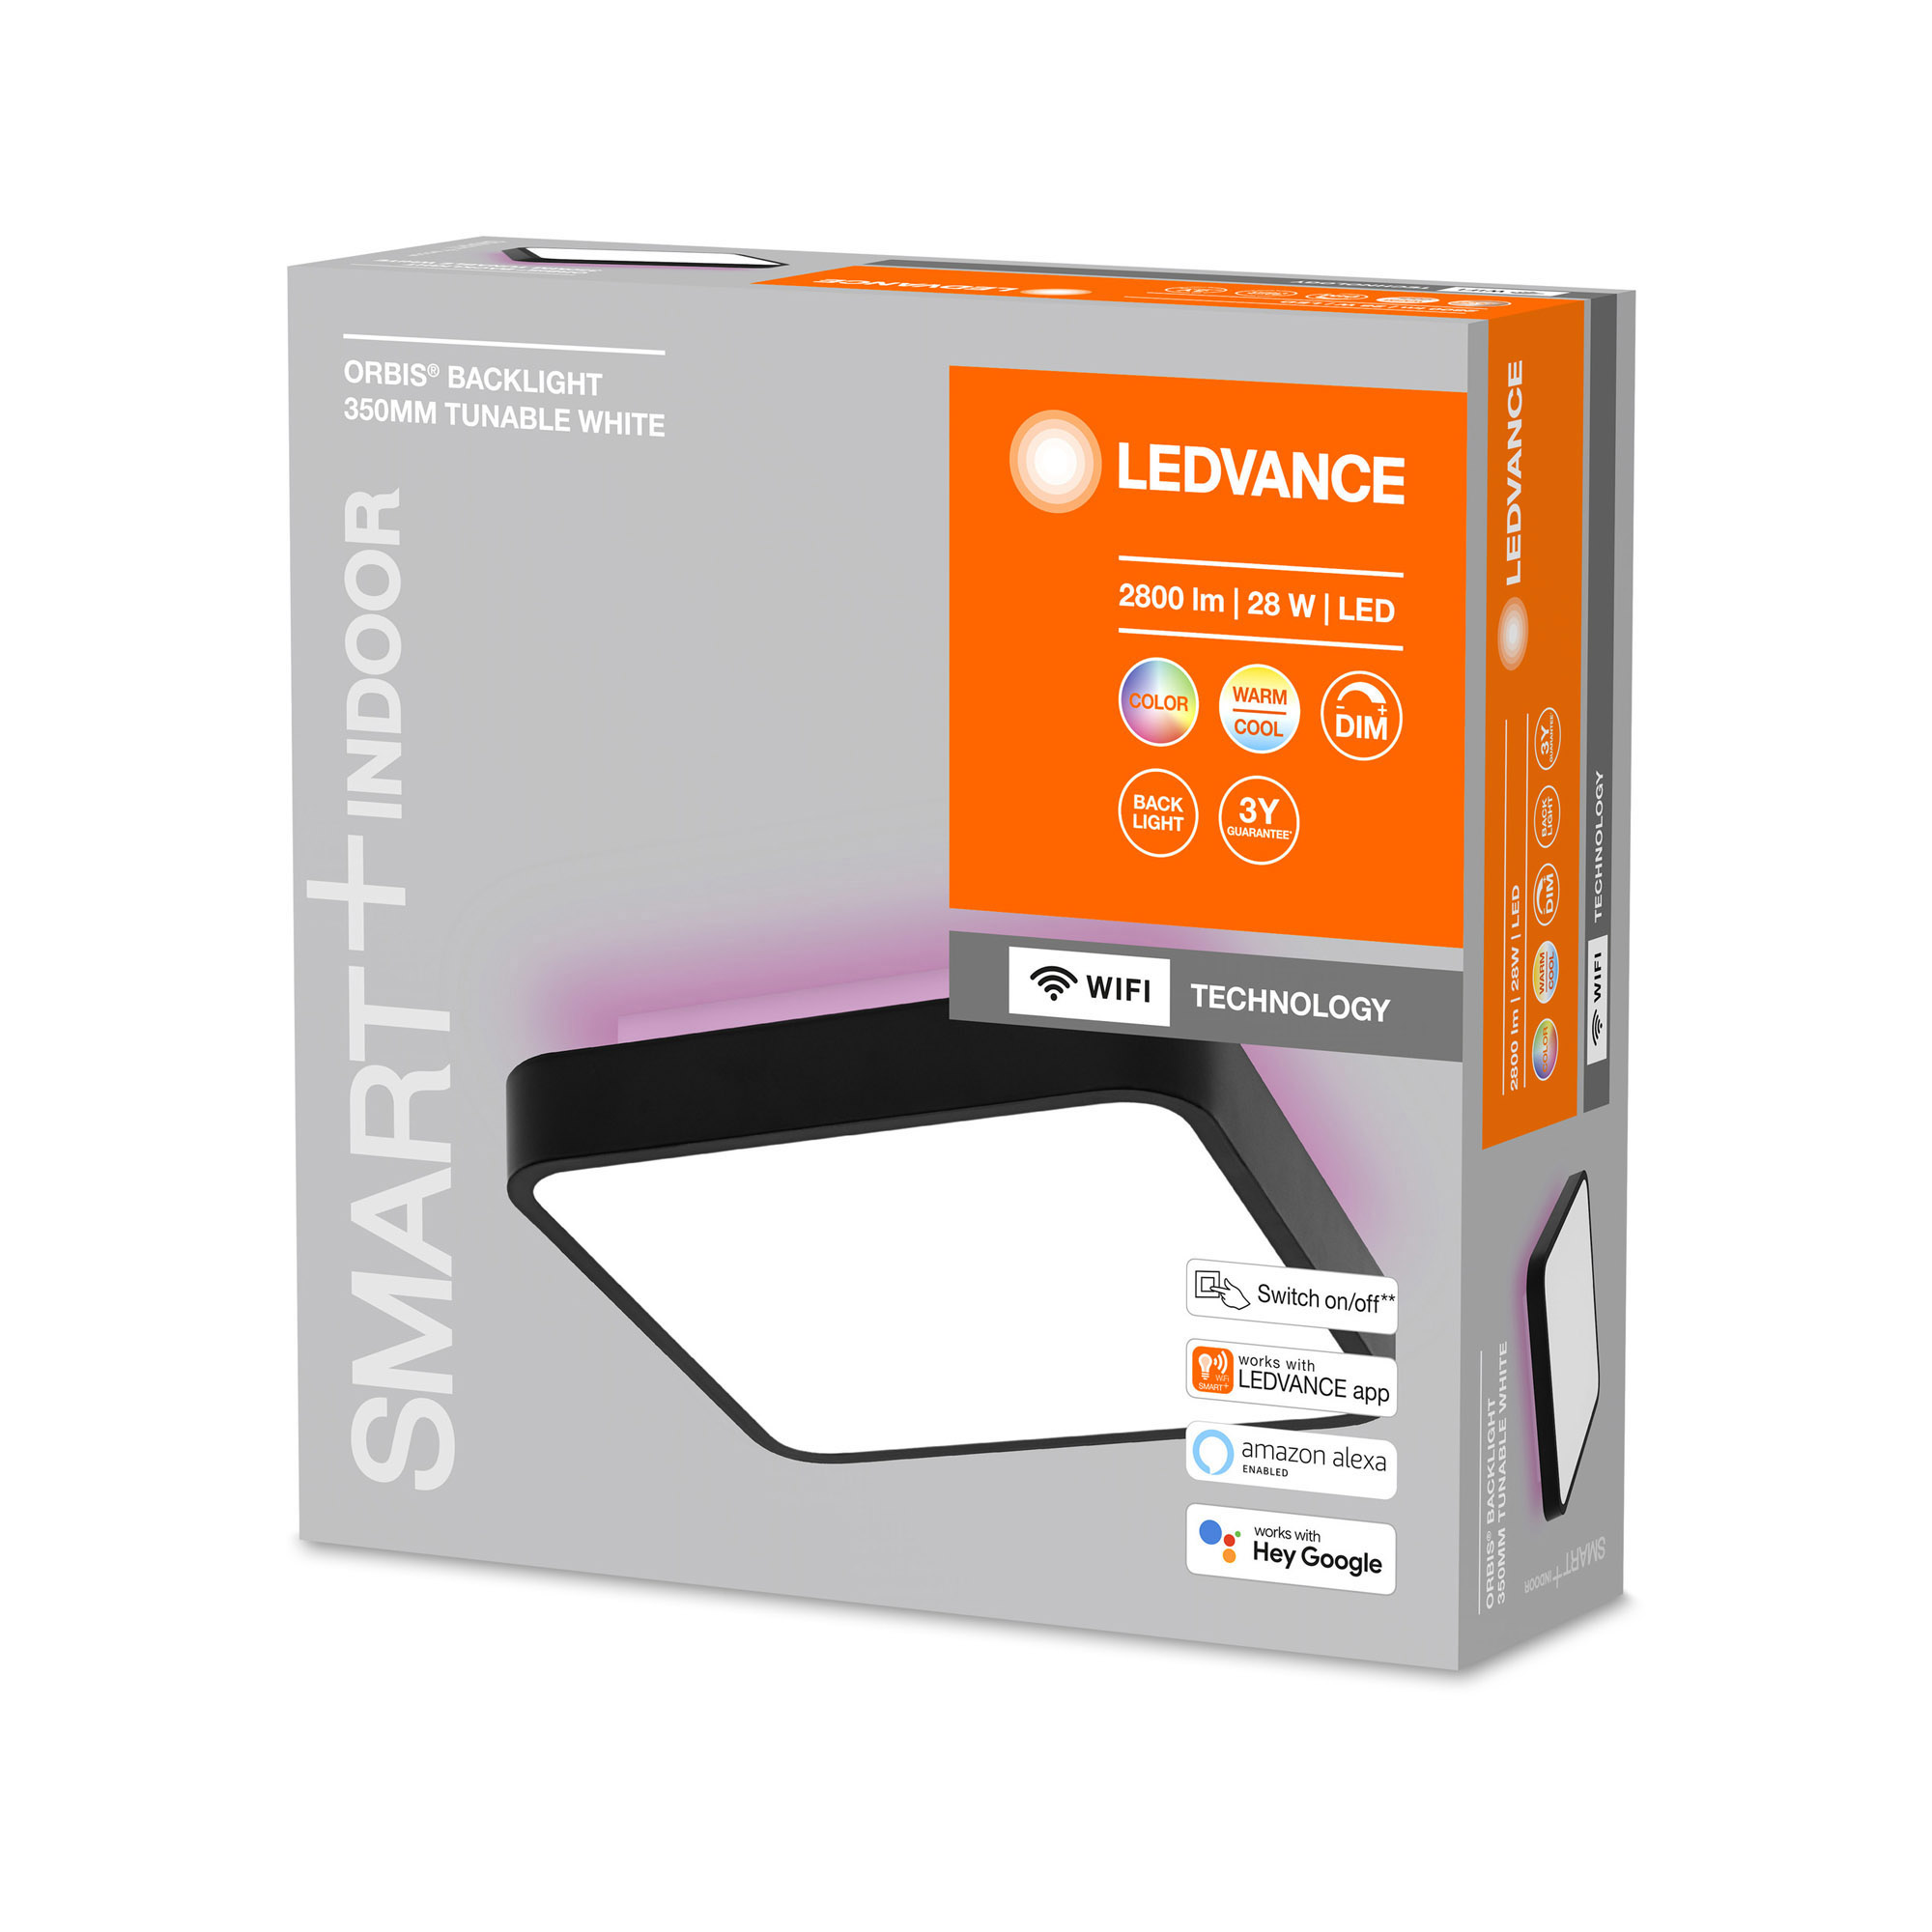 LEDVANCE SMART+ WiFi Tunable White RGB LED Ceiling Light ORBIS Backlight 350x350mm black 2400lm